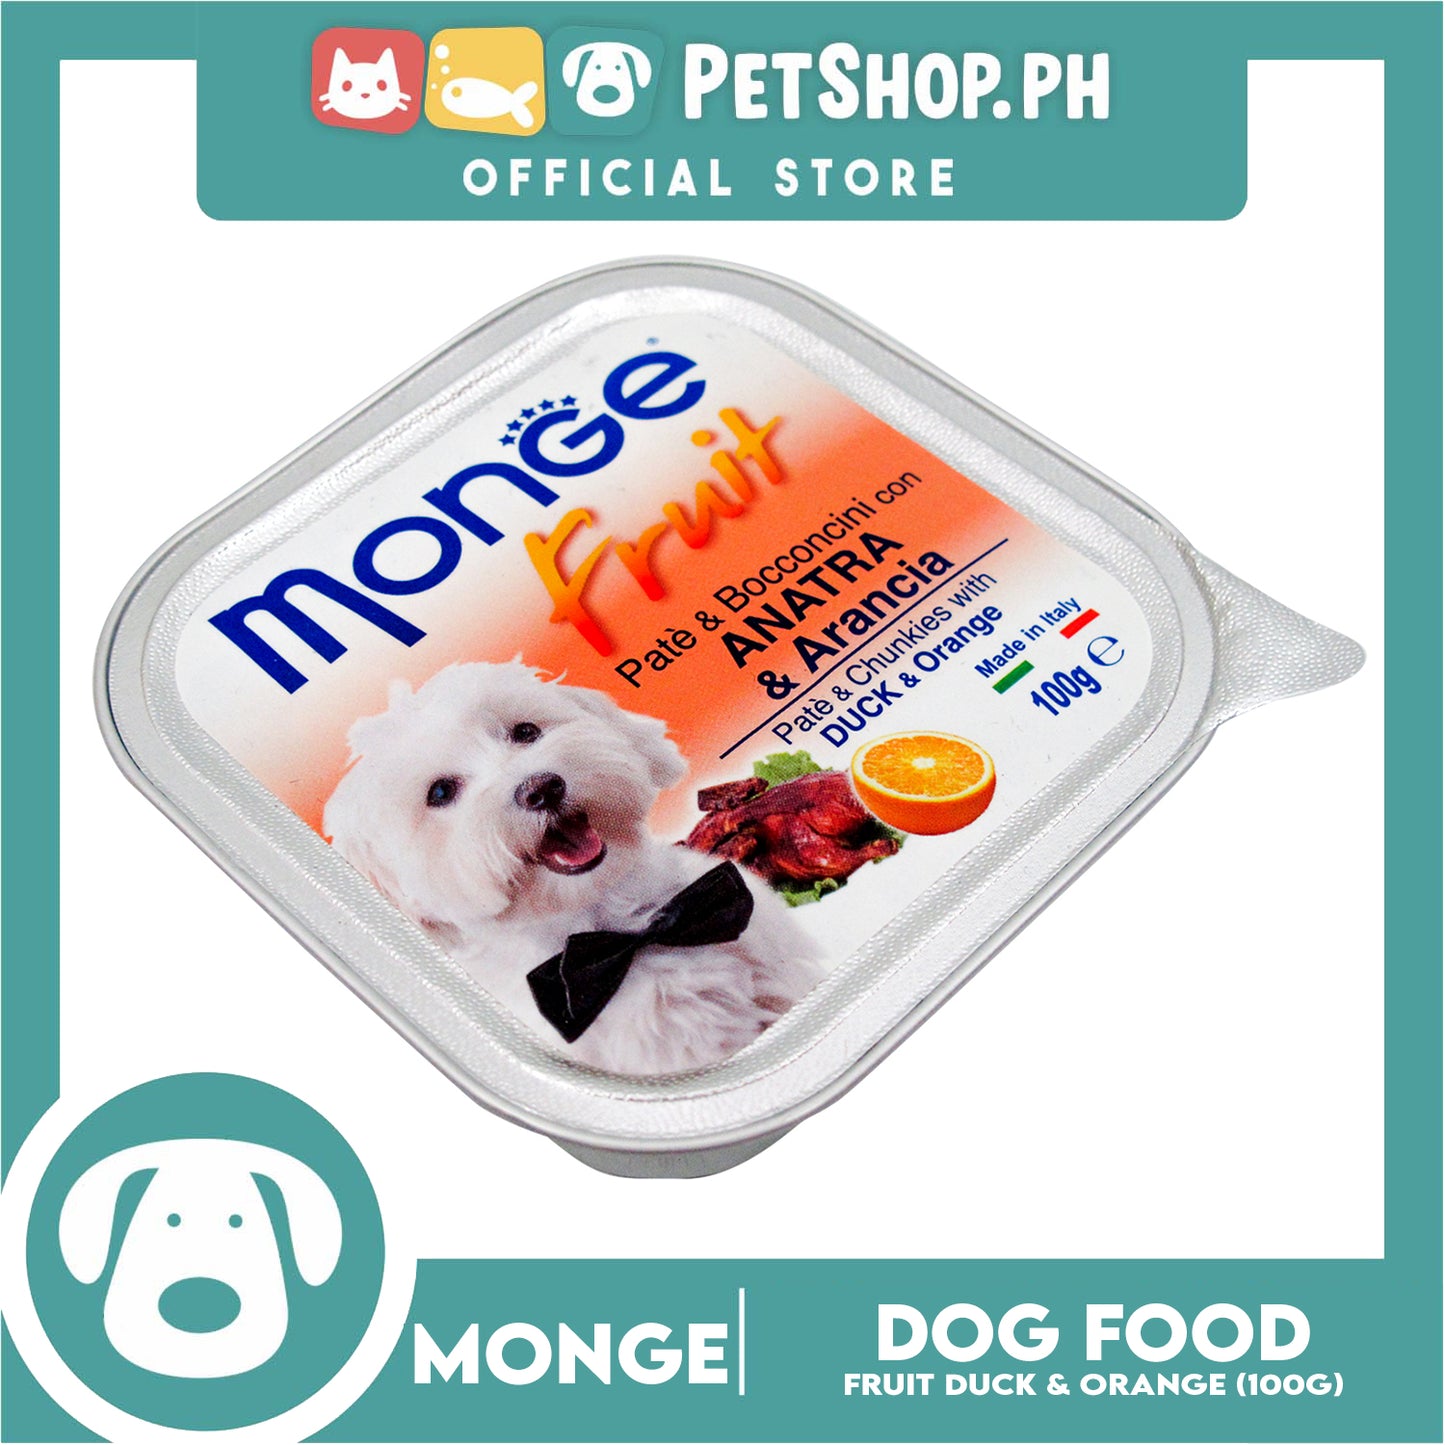 Monge Fruit Pate And Chunkies 100g (Duck And Orange) Dog Wet Food